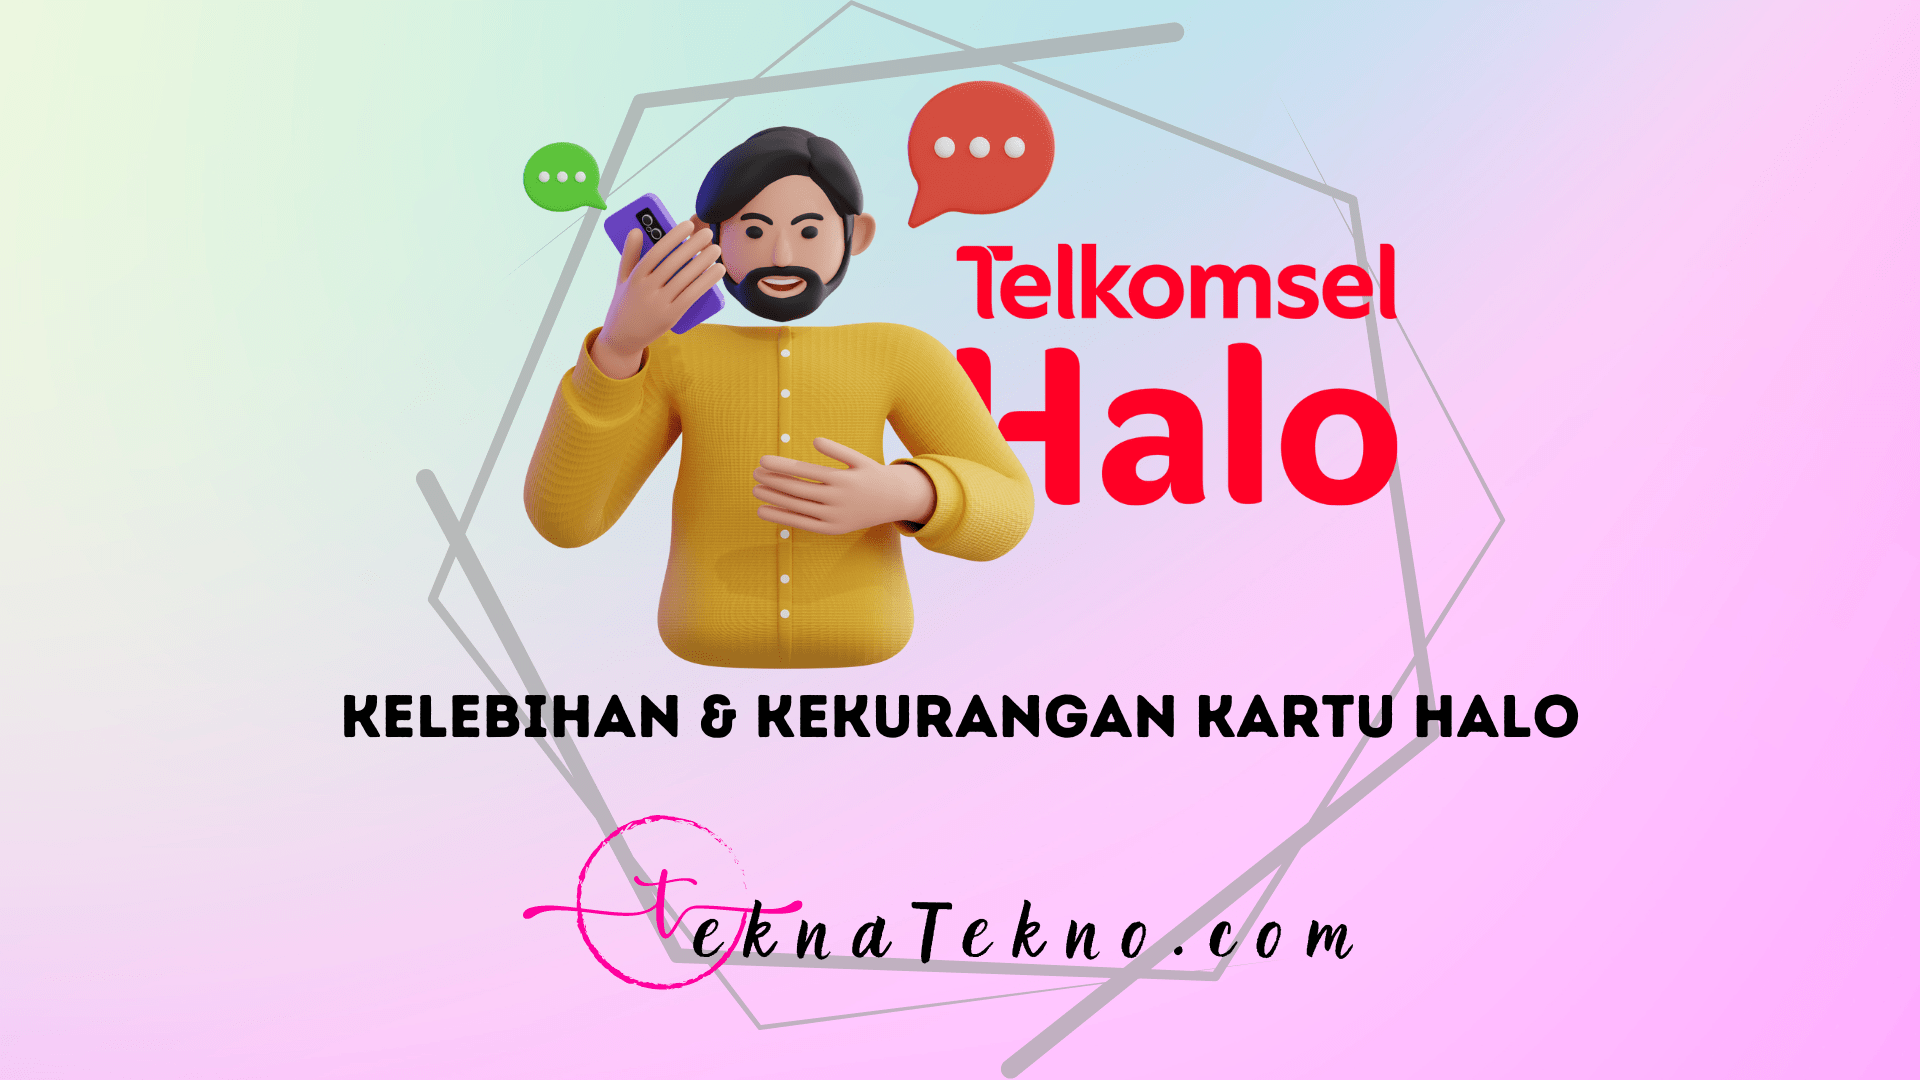 Telkomsel Halo Adalah: Kelebihan Kartu Halo Telkomsel Dibanding Operator Lain